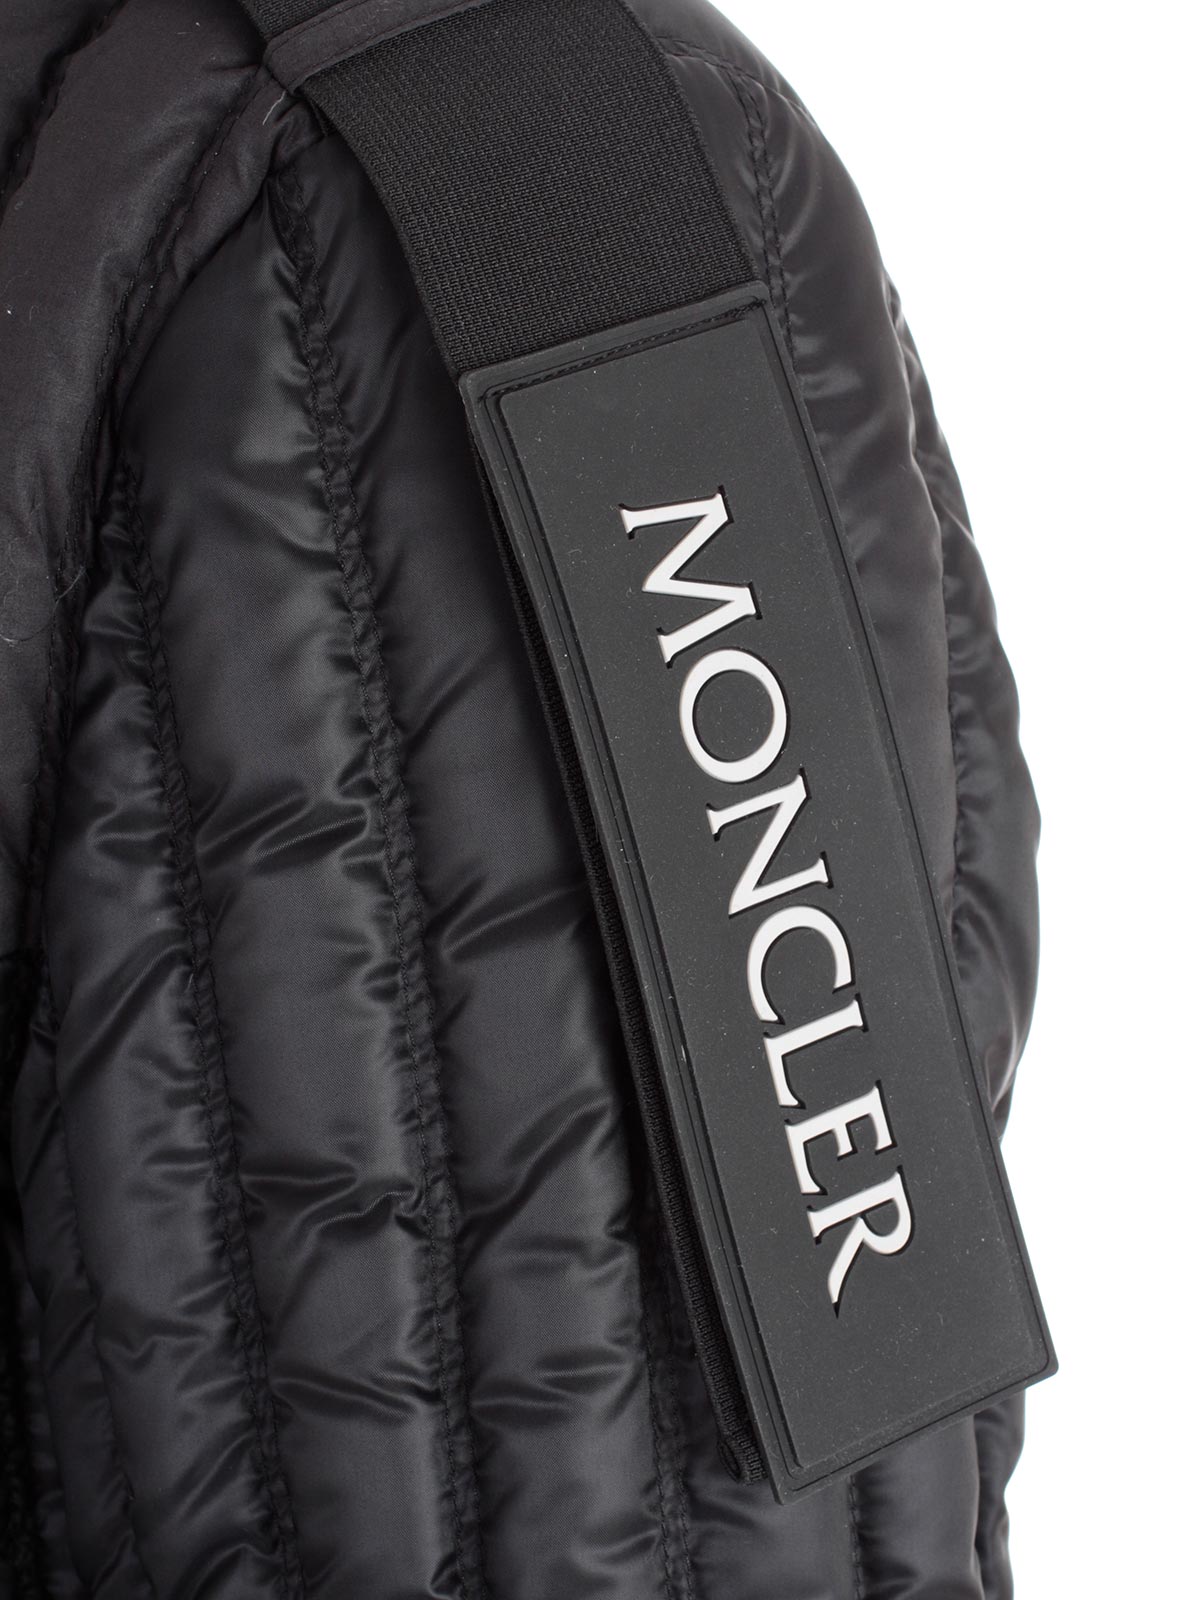 moncler genius coat